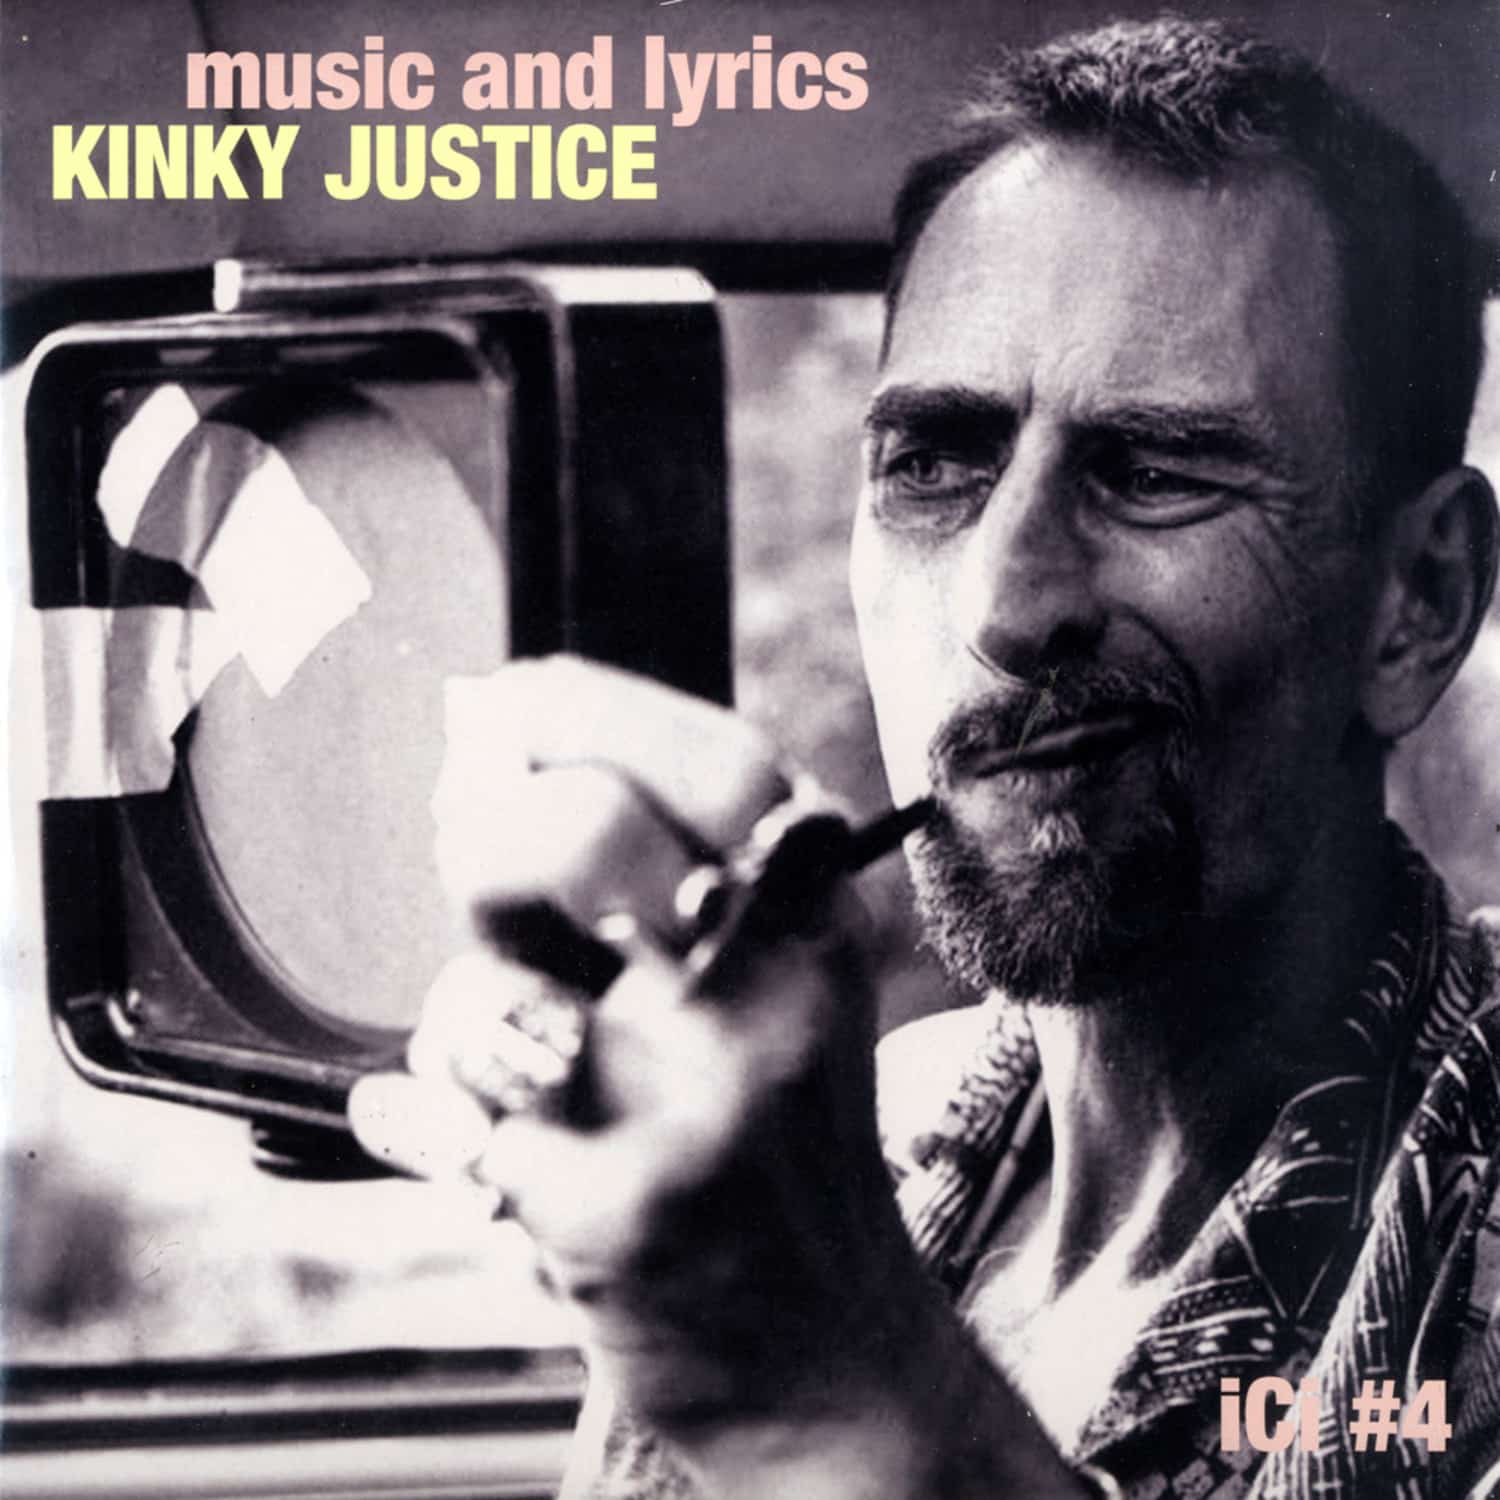 Kinky Justice - MUSIC AND LYRICS 